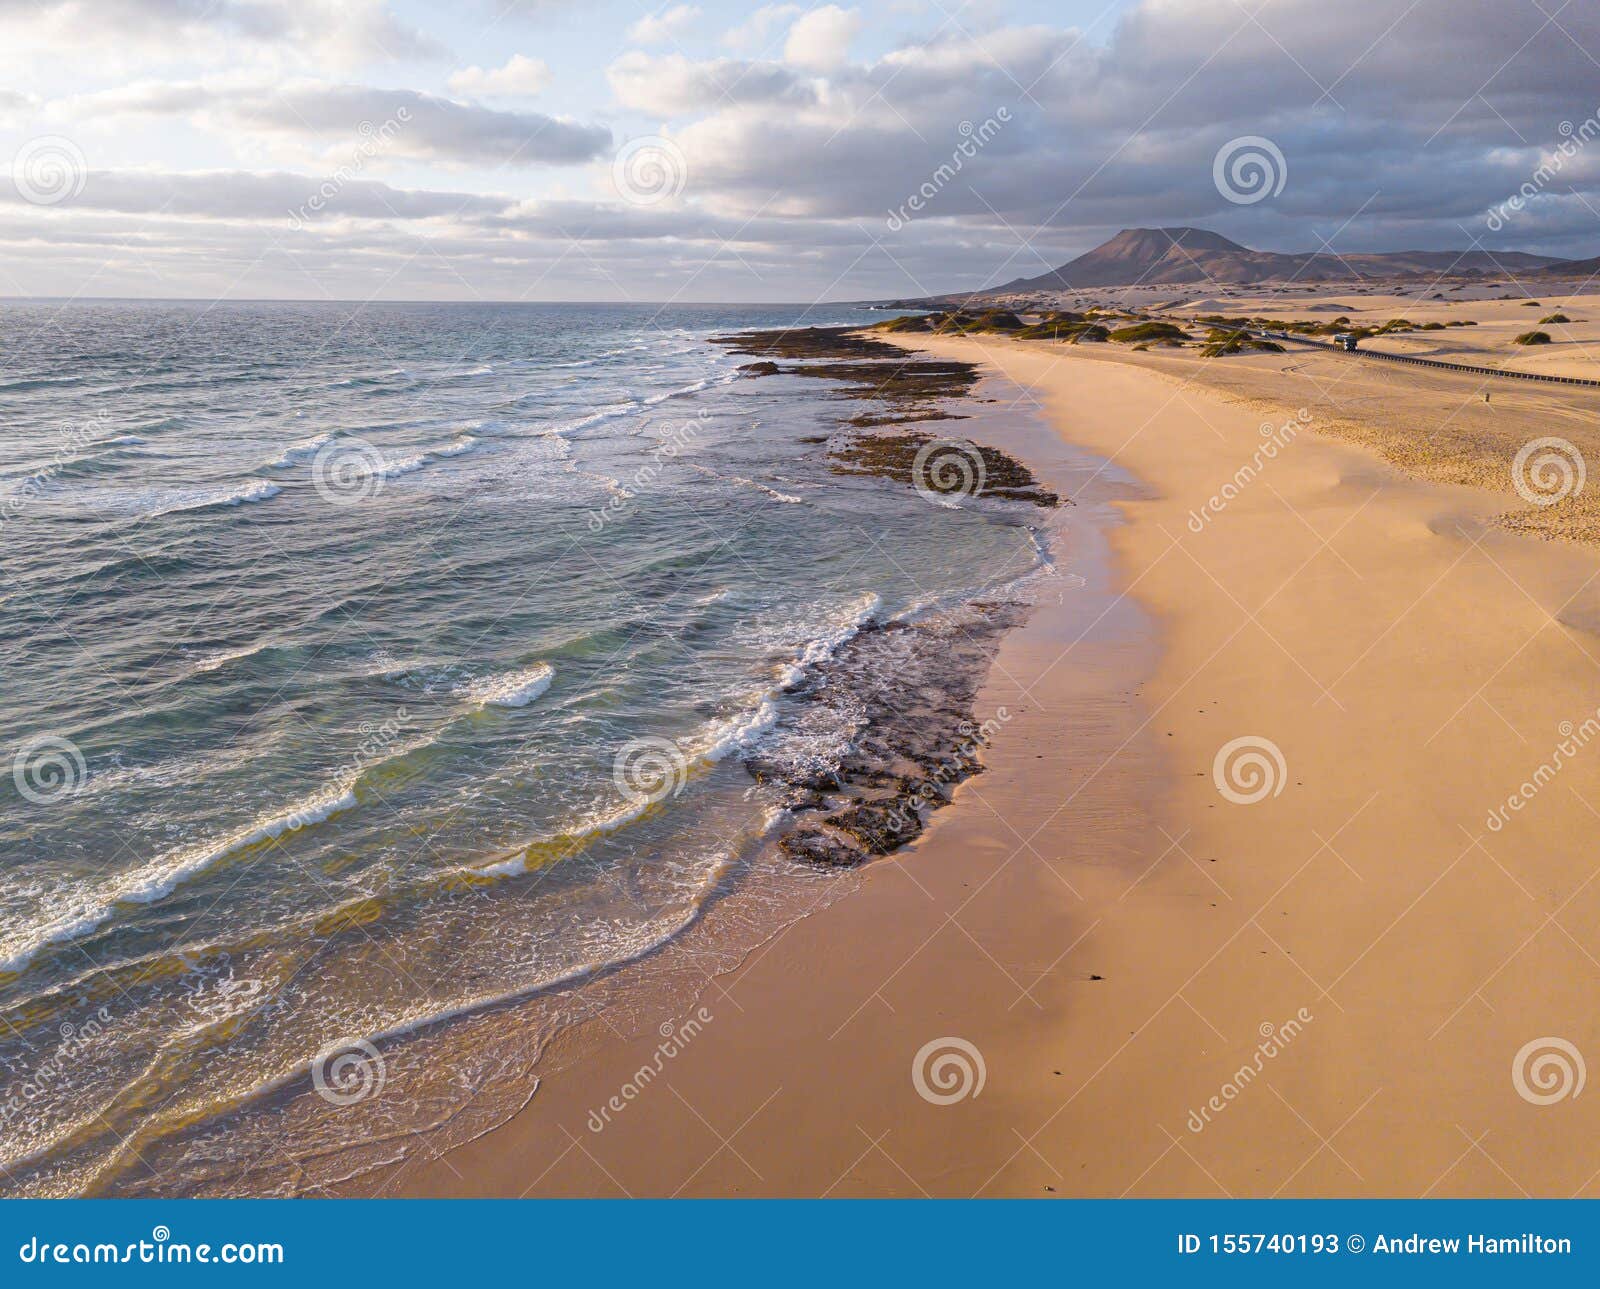 aerial overhead image of the corralejo coastline, fuerteventura